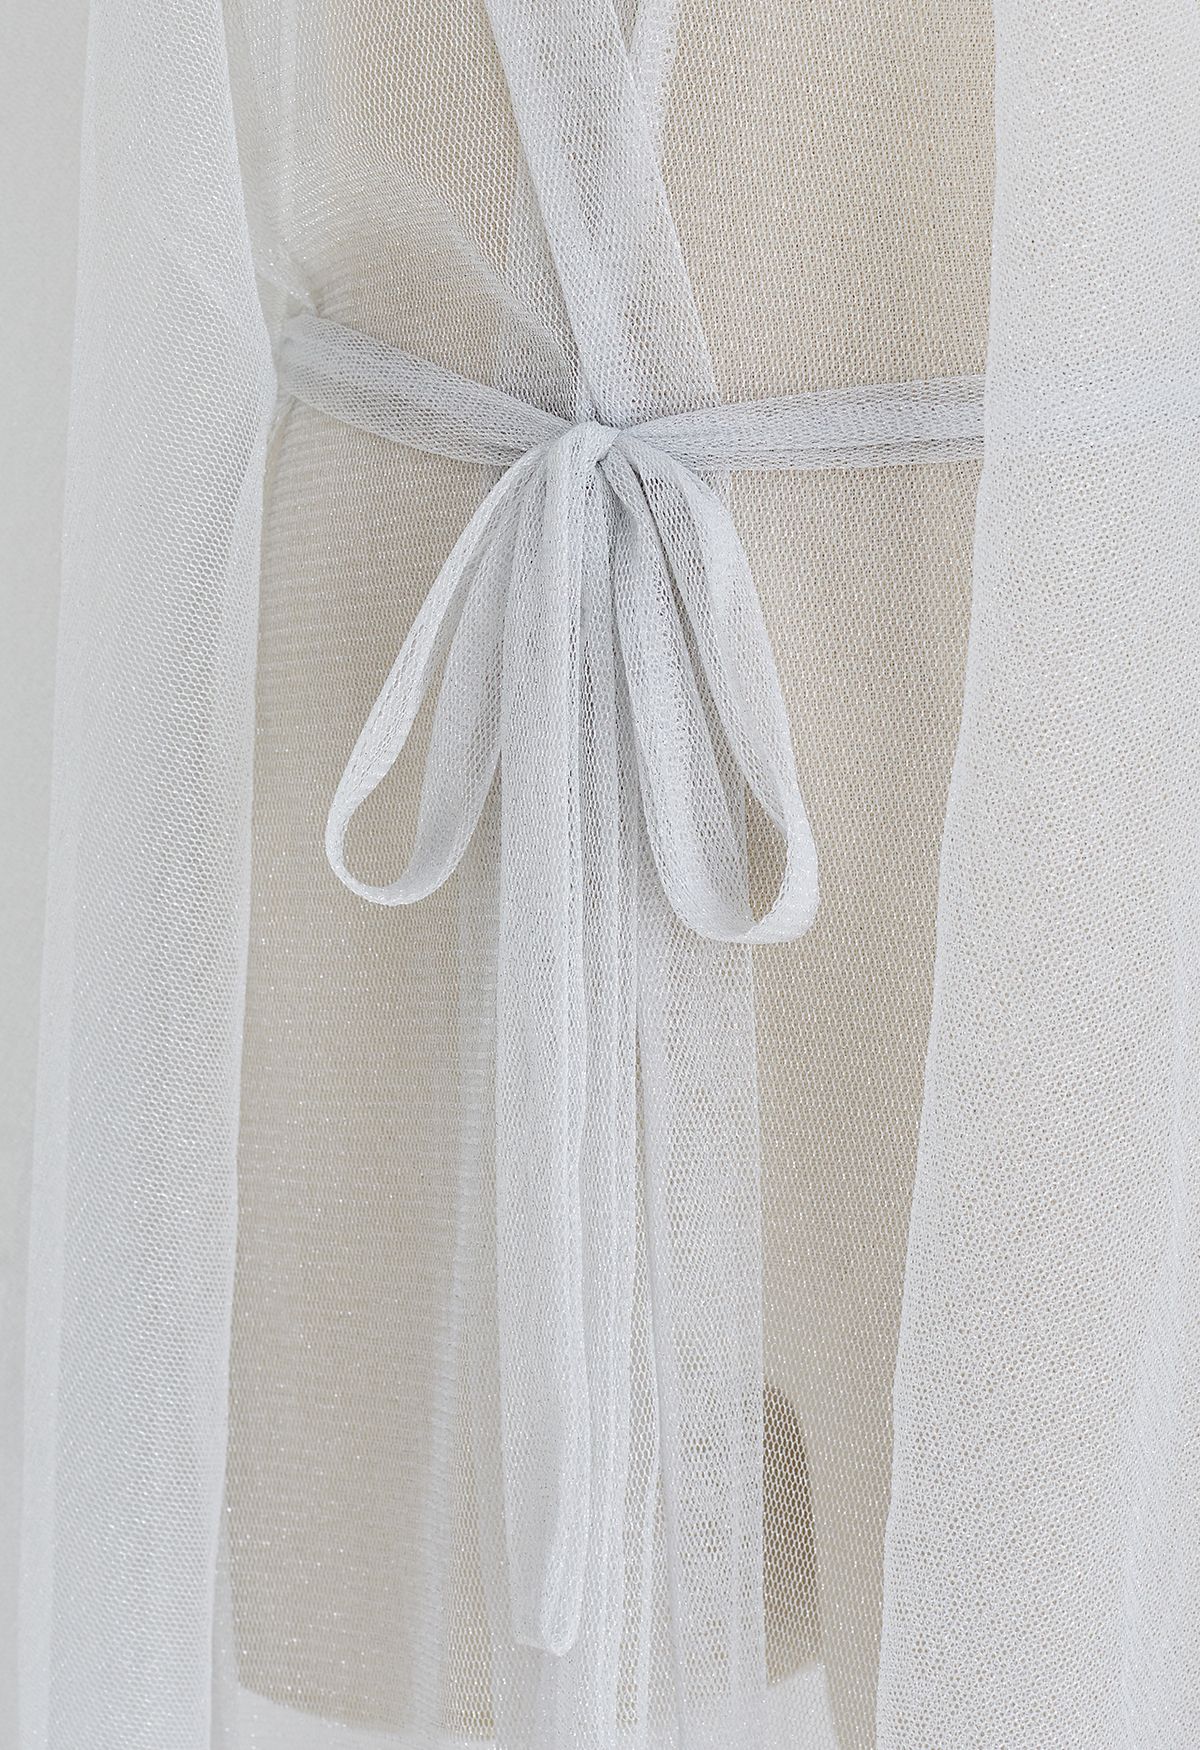 Shimmer Tulle Flare Kimono in White